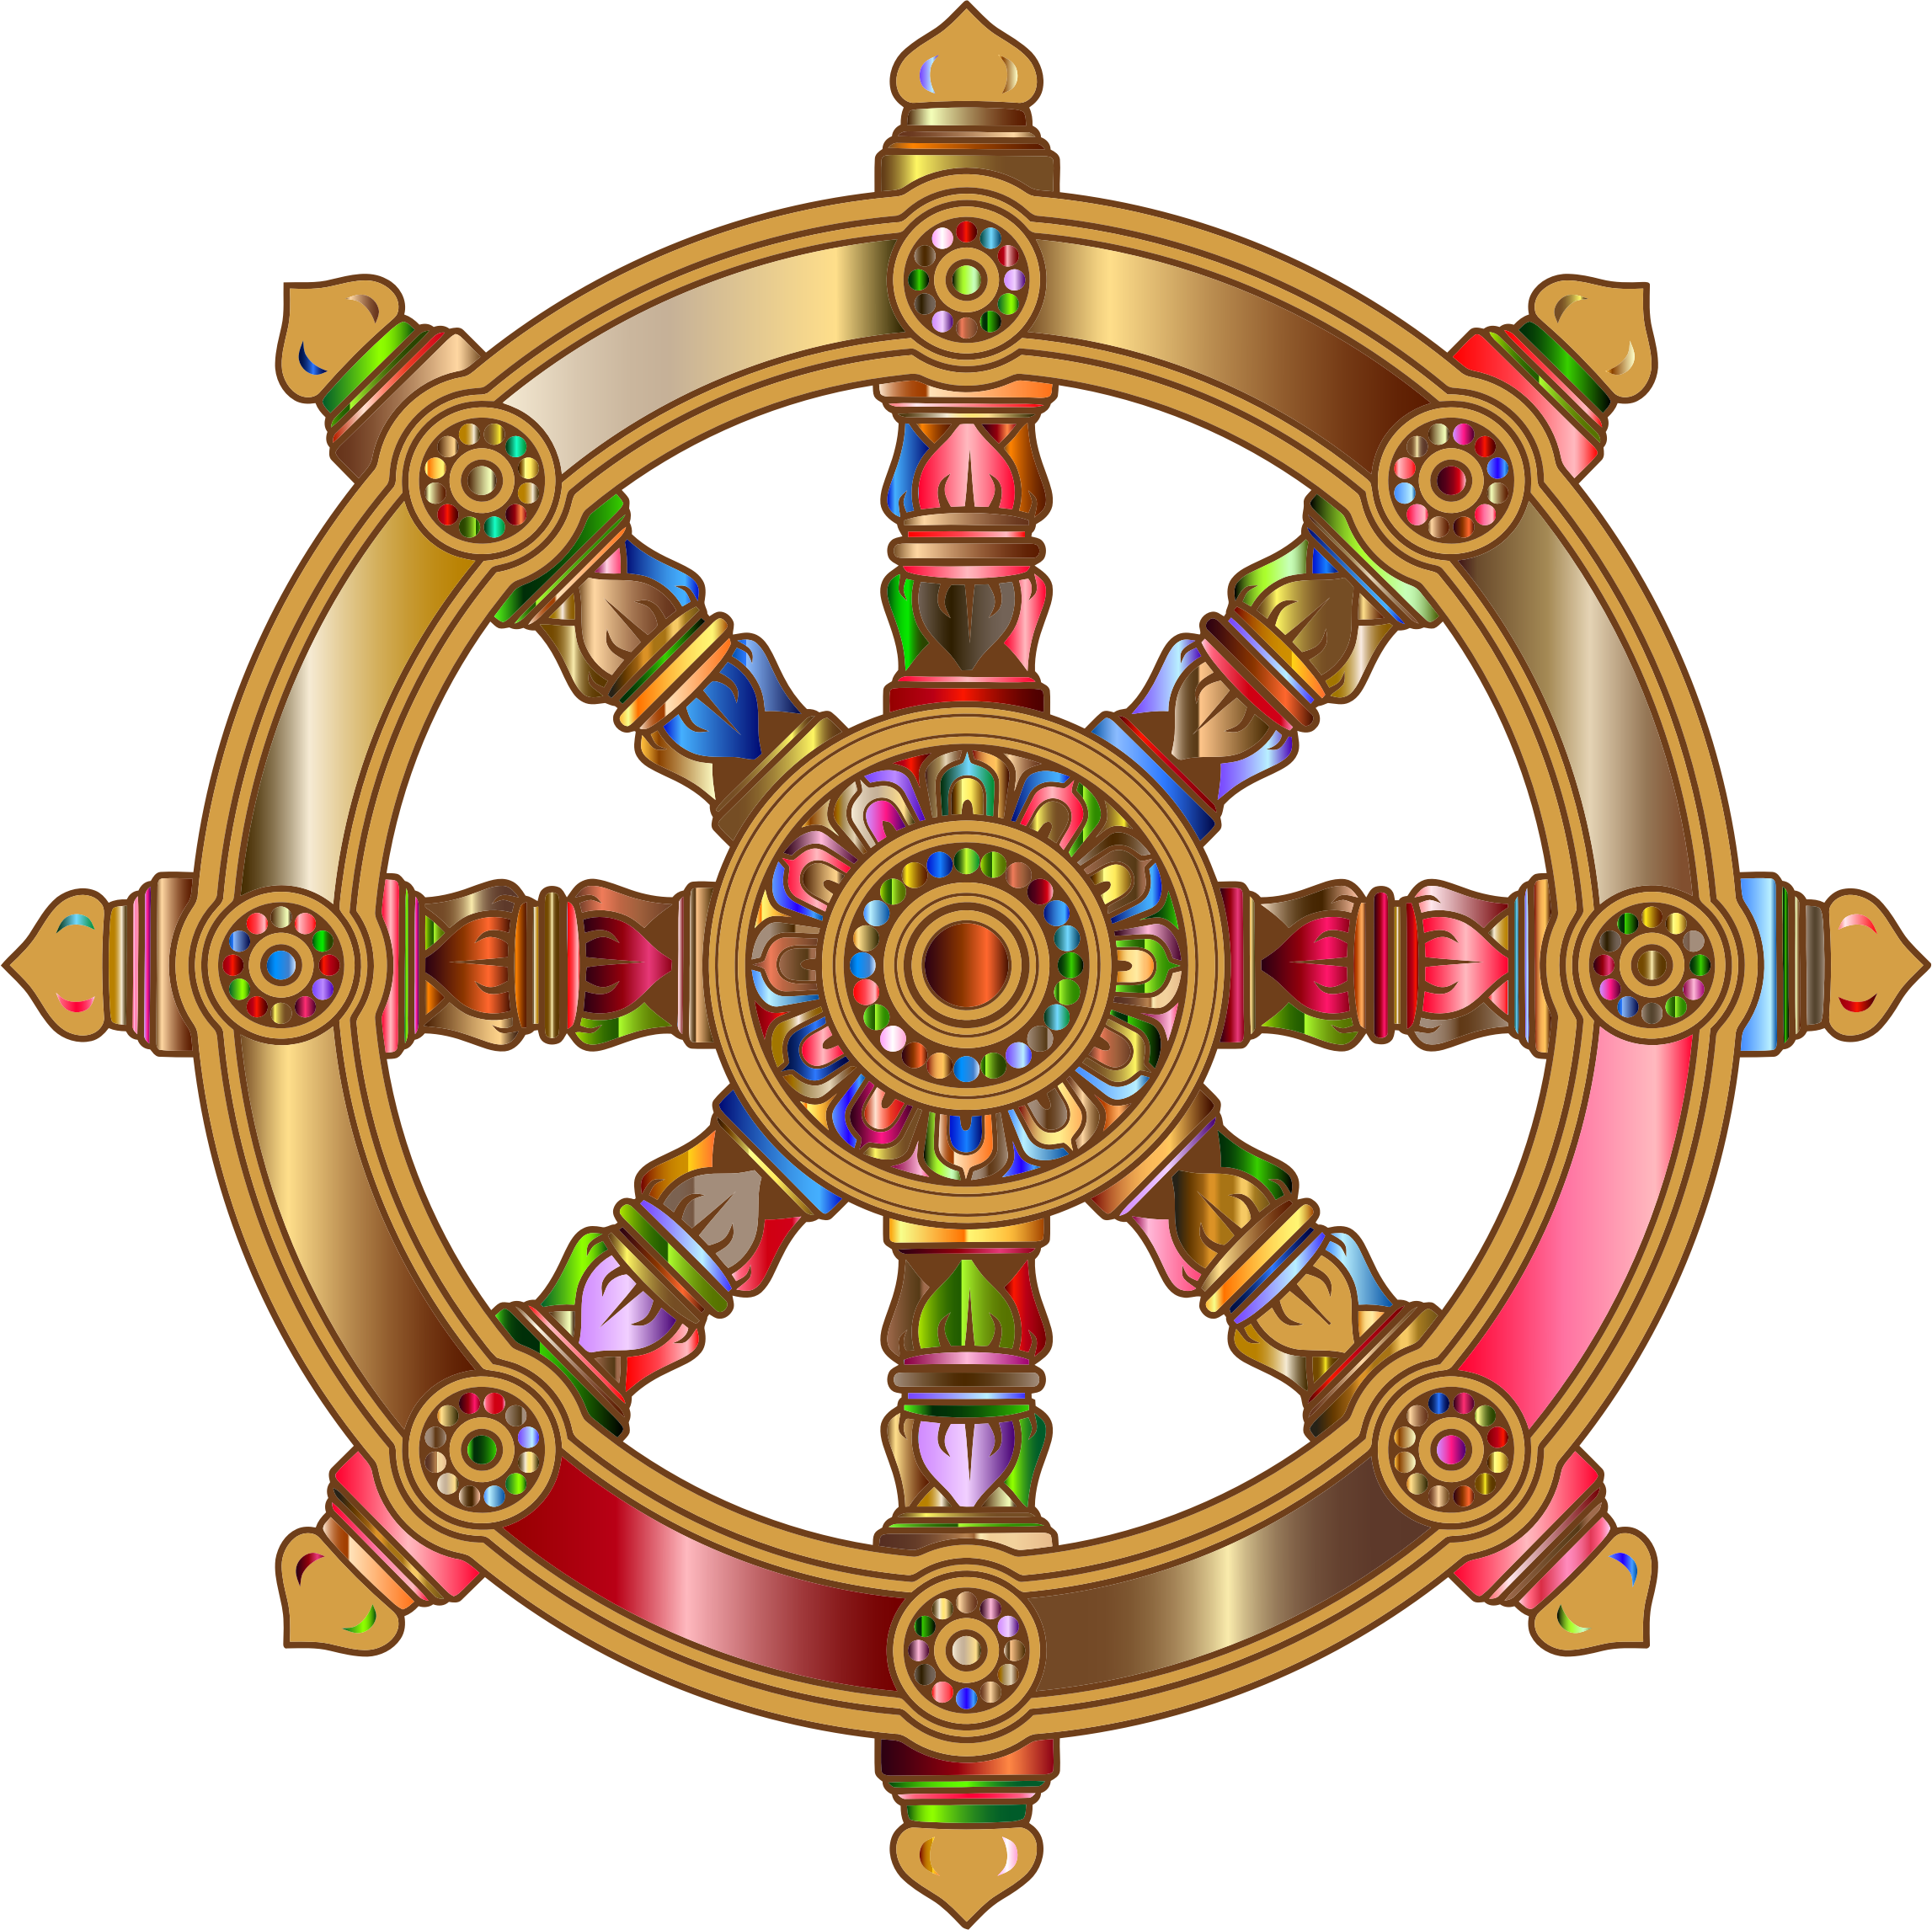 New SVG image - Wheel Of Dhar